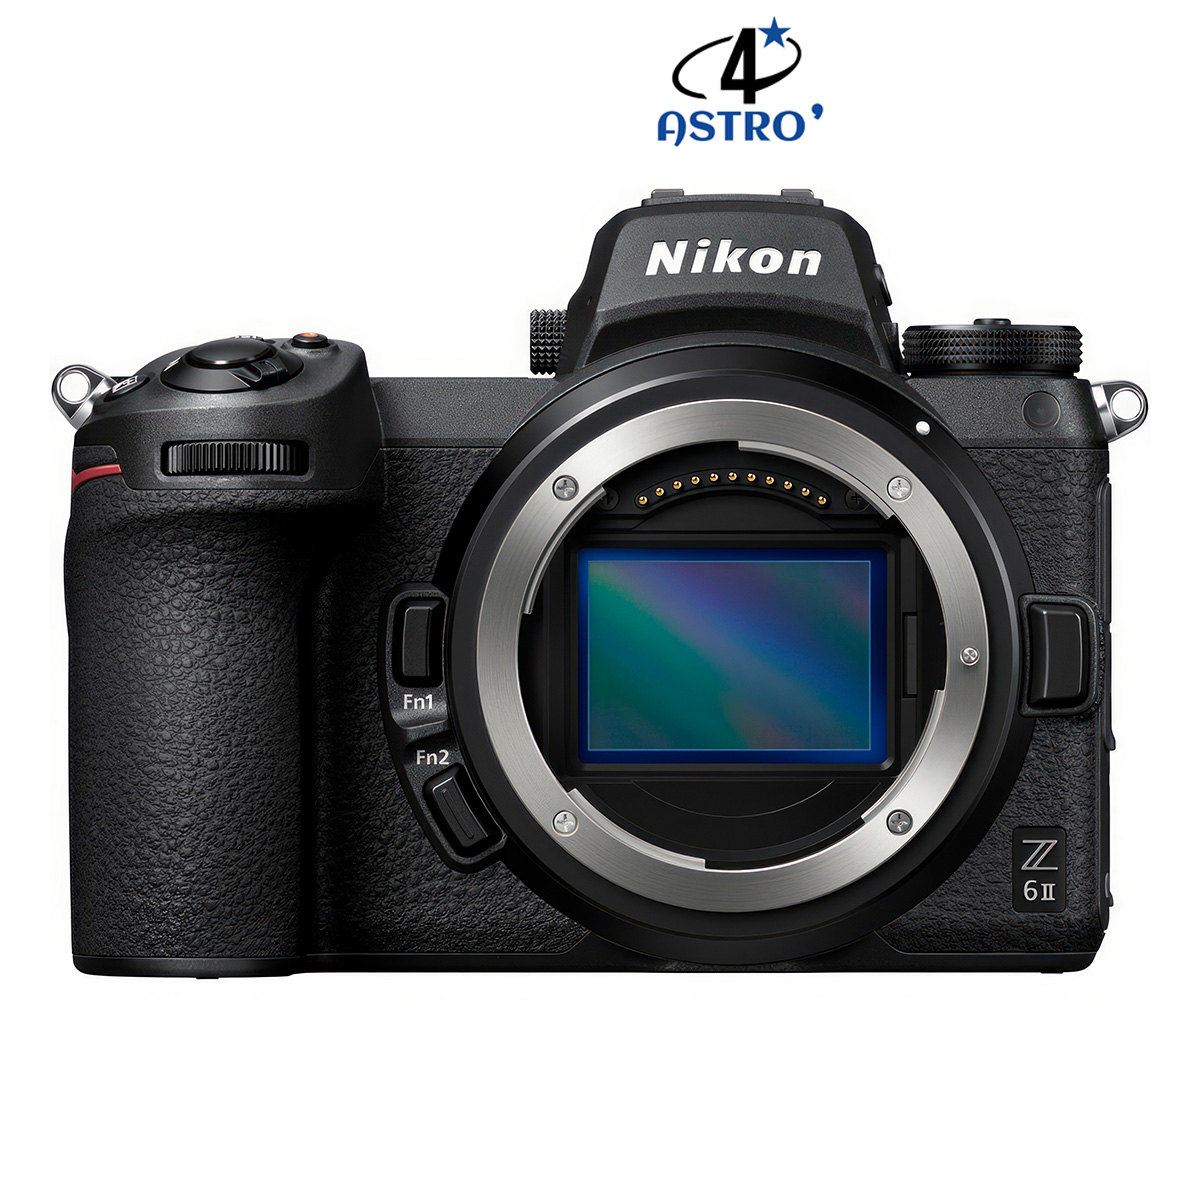 Hybride Nikon Z6II neuf défiltré + refiltré 4'Astro 4'Astro modding